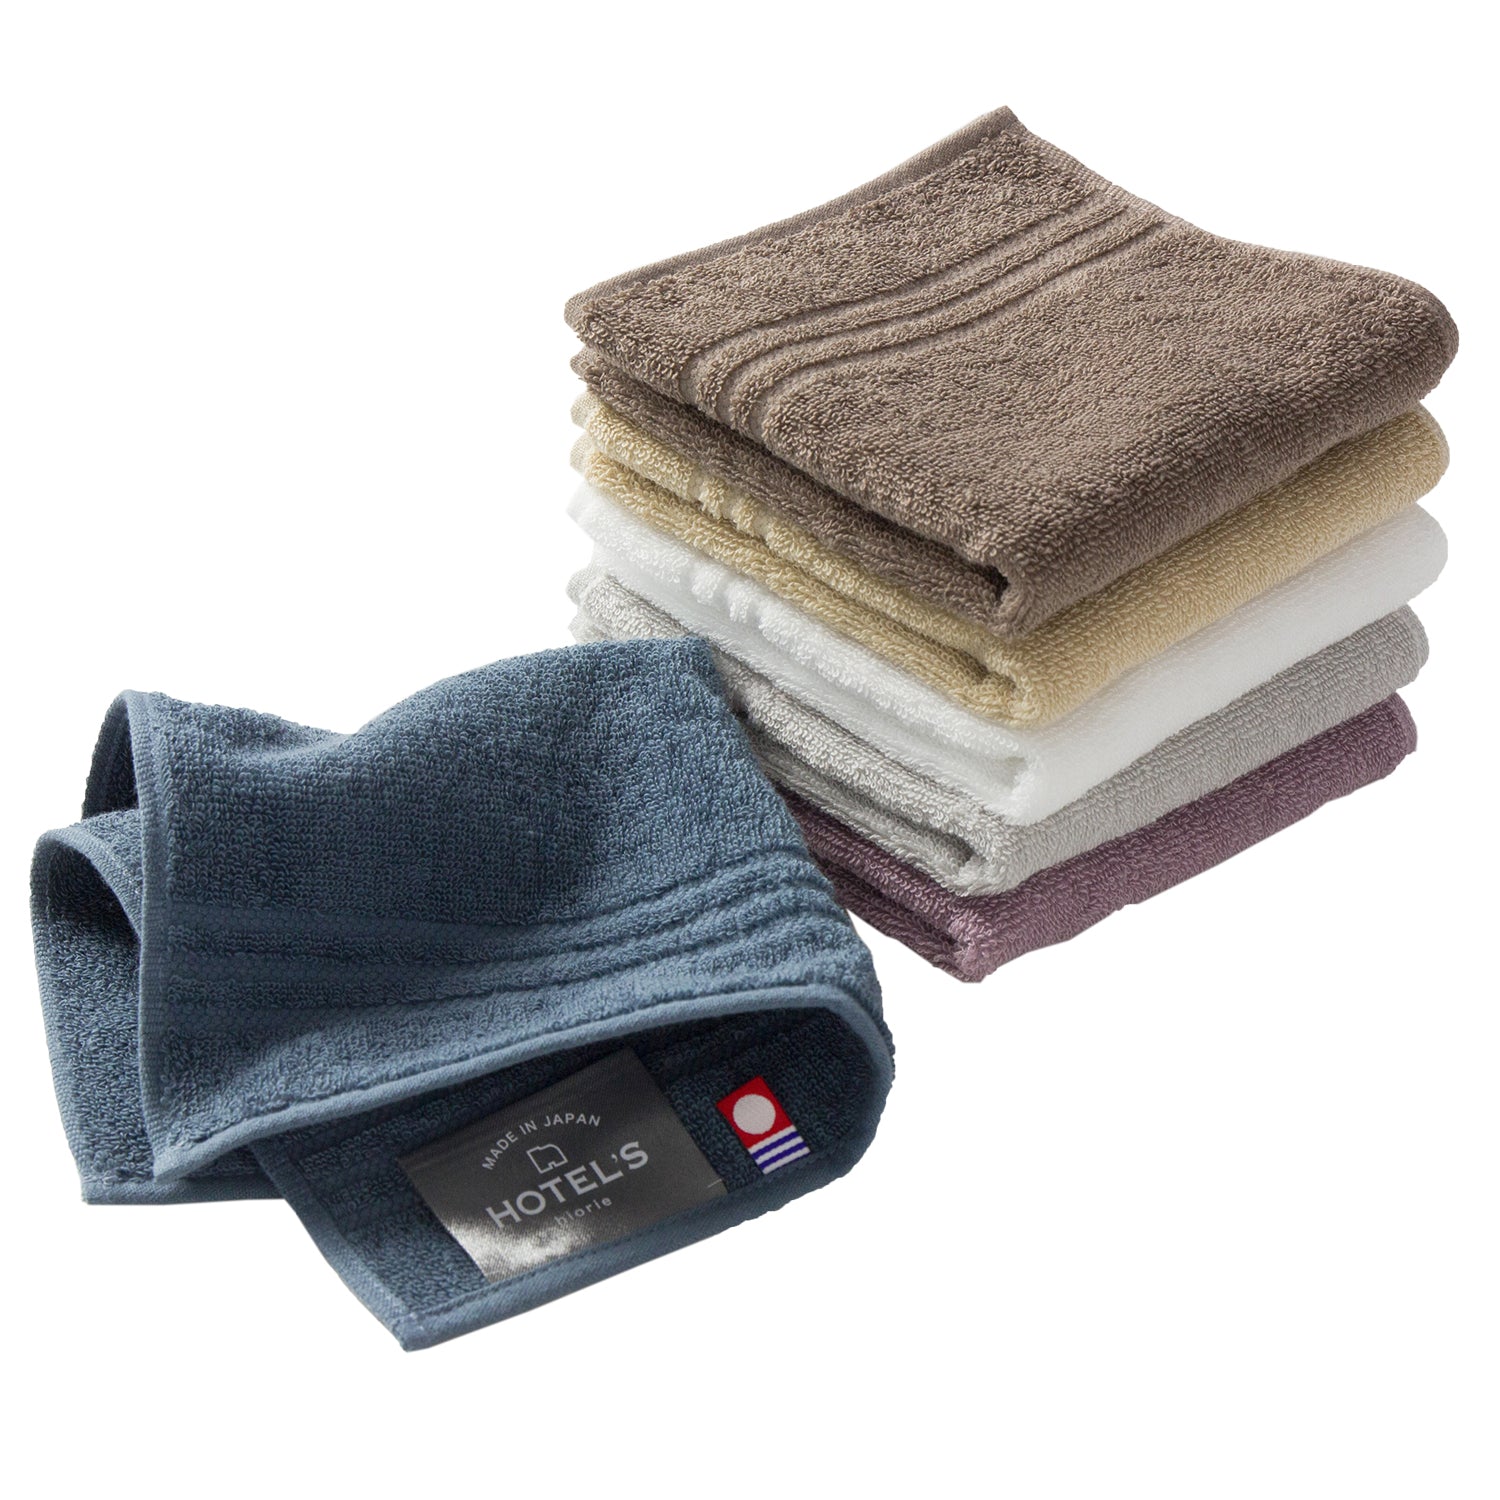 Hiorie Imabari Soft Luxury Fluffy Handkerchief Towel 6 Sheets Cotton 100% Japan